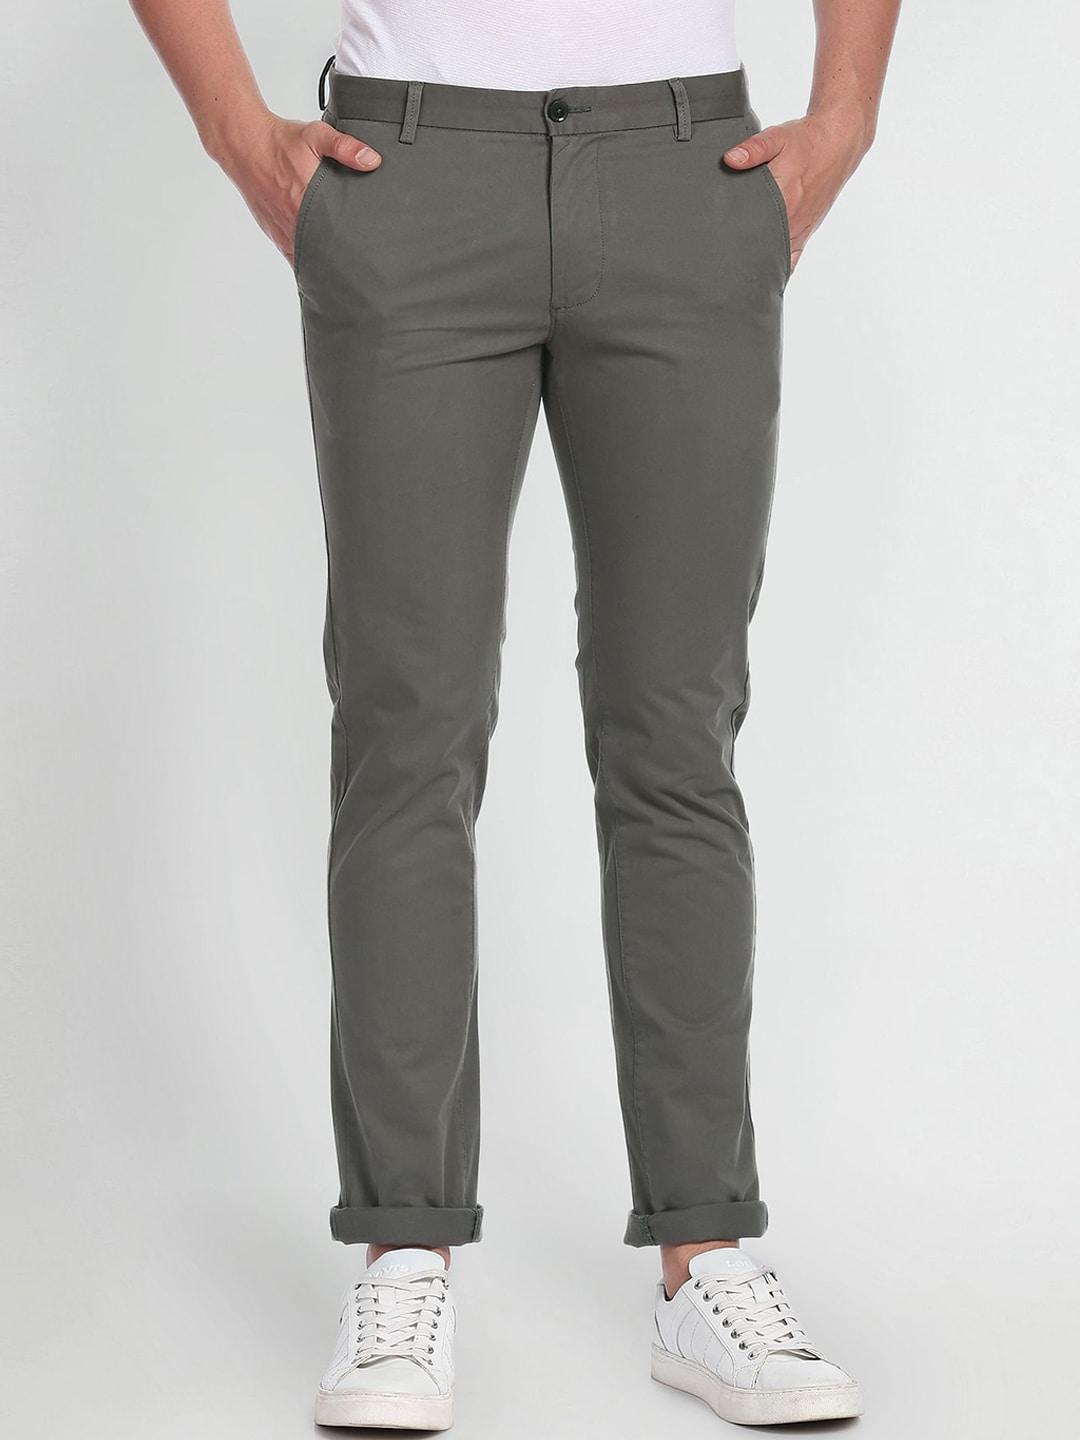 arrow-sport-men-slim-fit-low-rise-casual-trousers